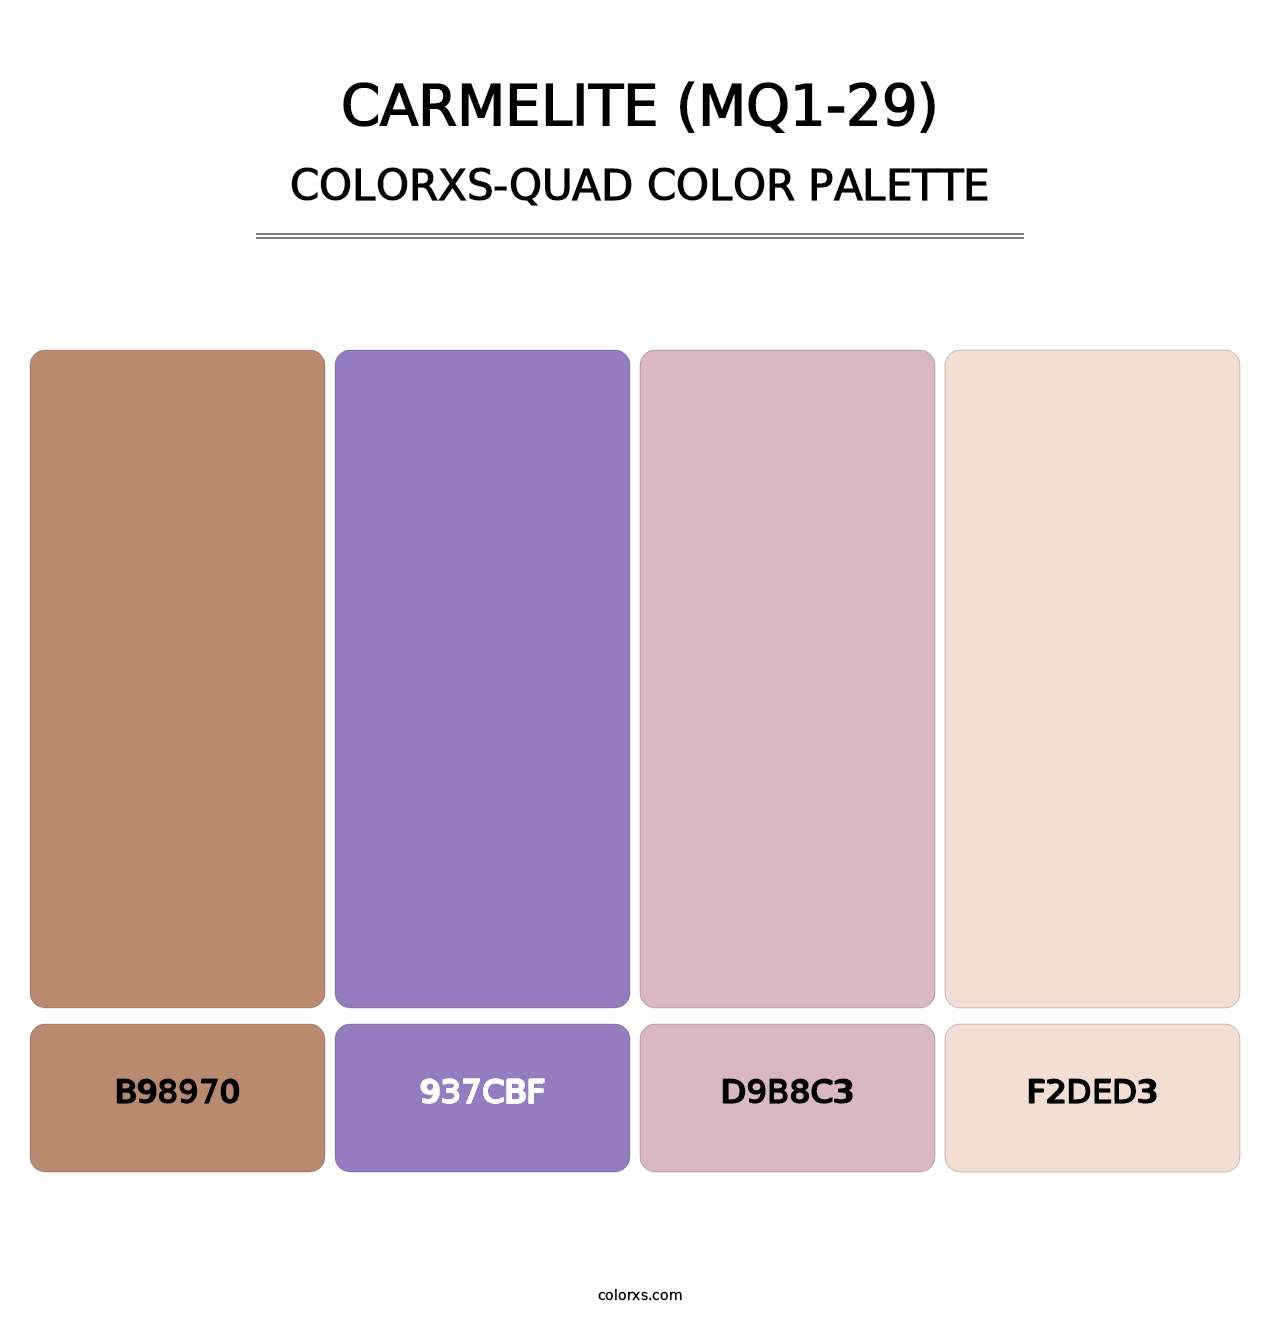 Carmelite (MQ1-29) - Colorxs Quad Palette